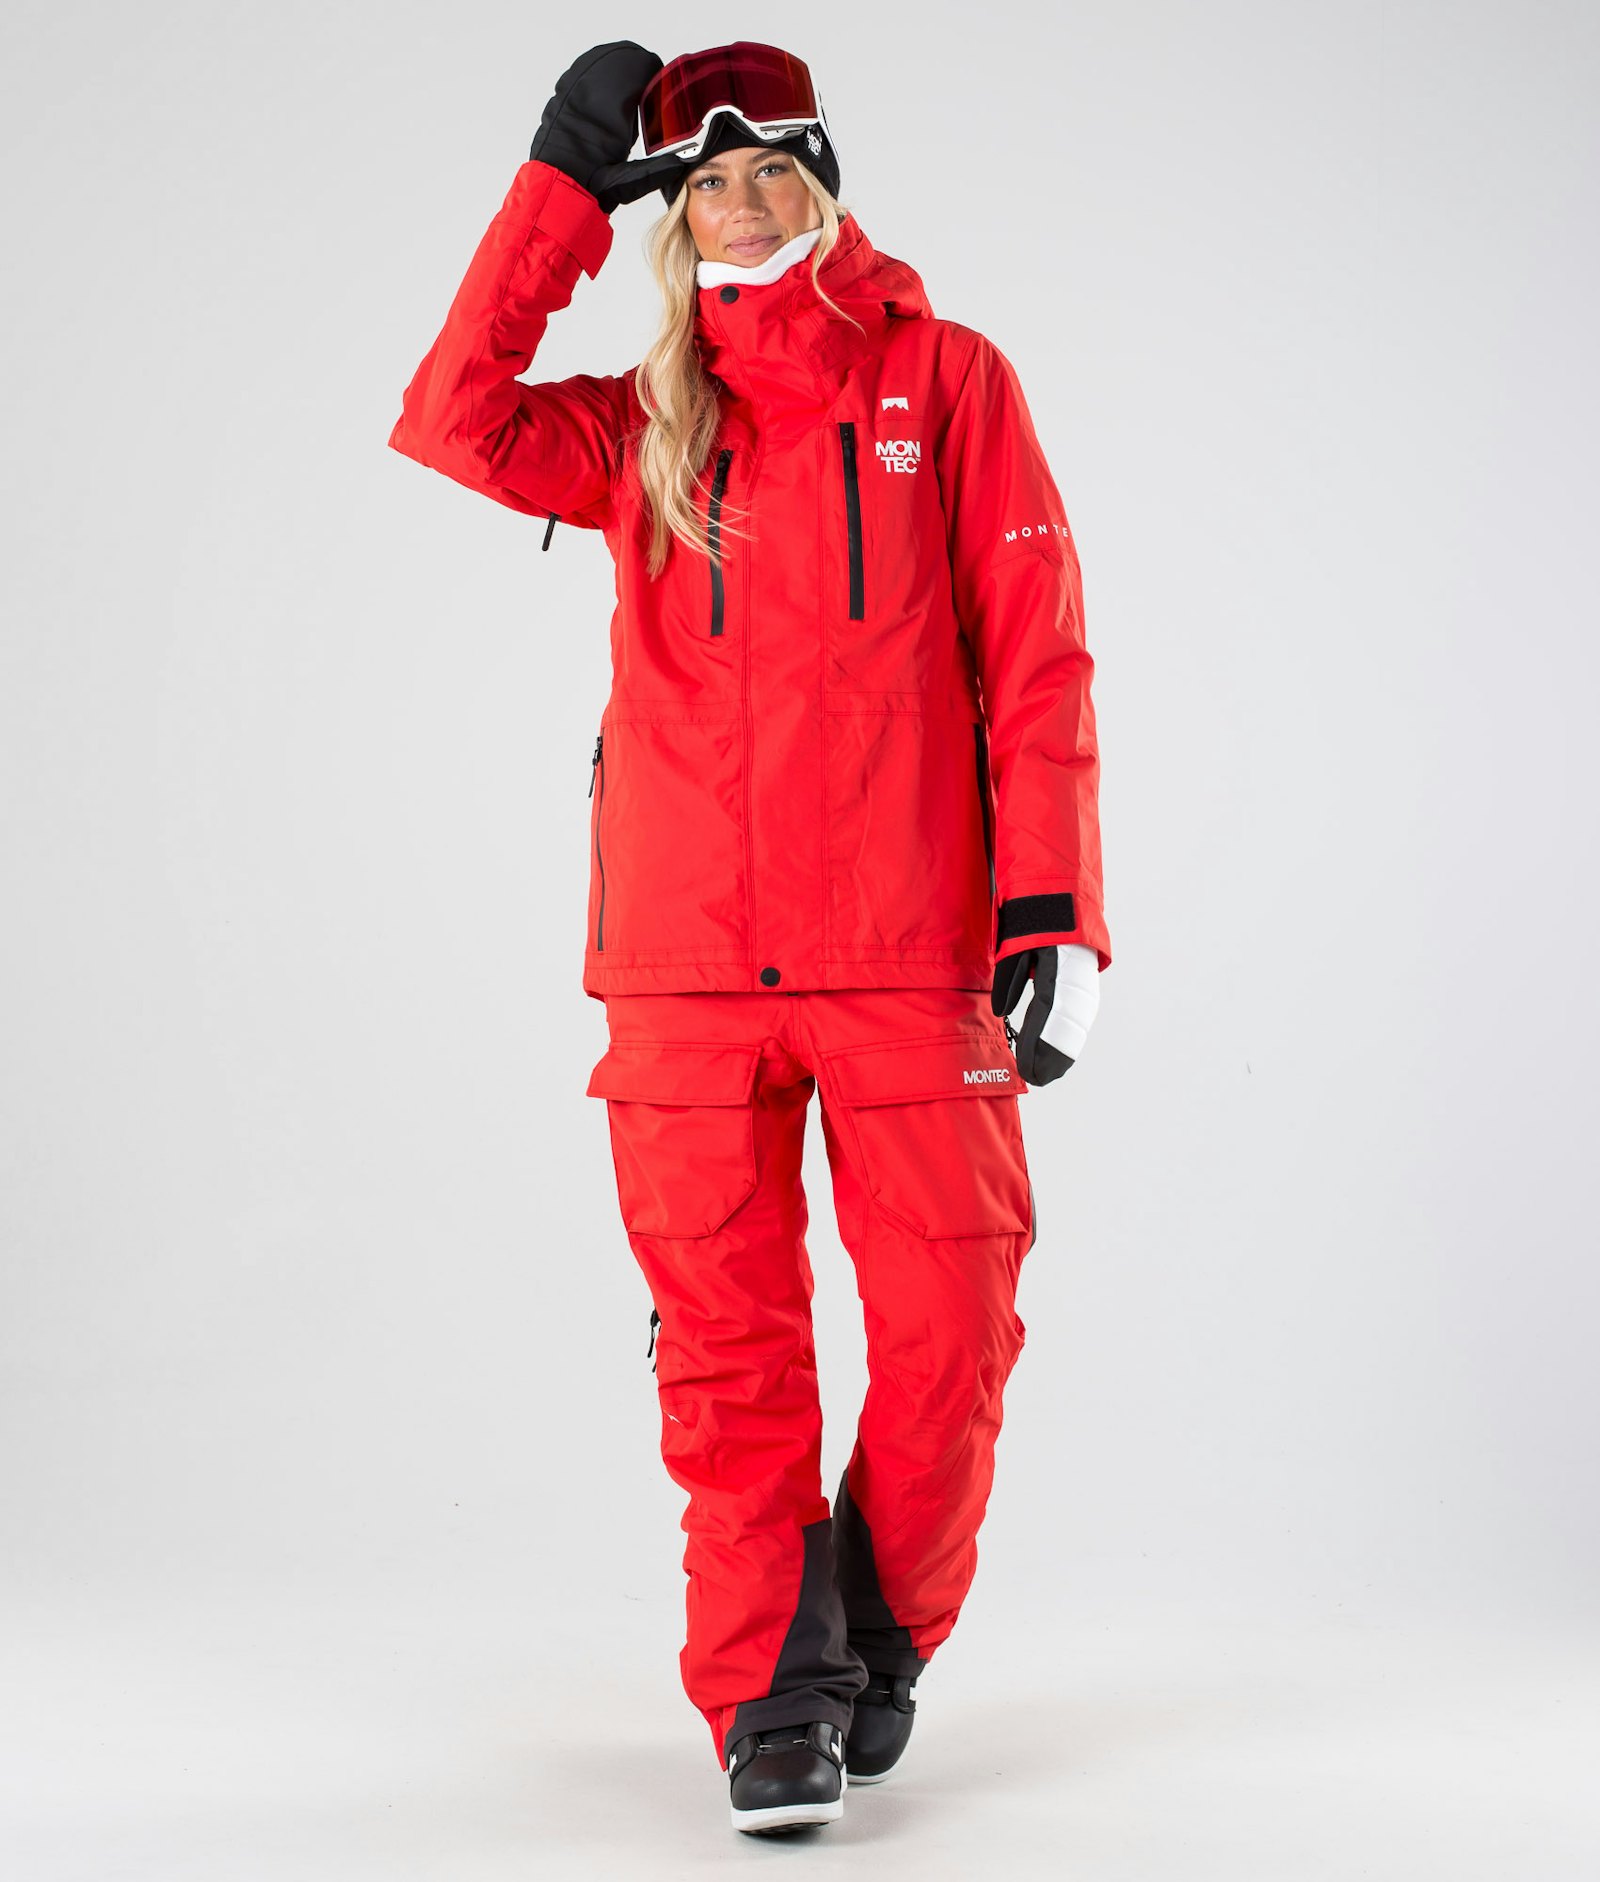 Fawk W 2019 Chaqueta Snowboard Mujer Red